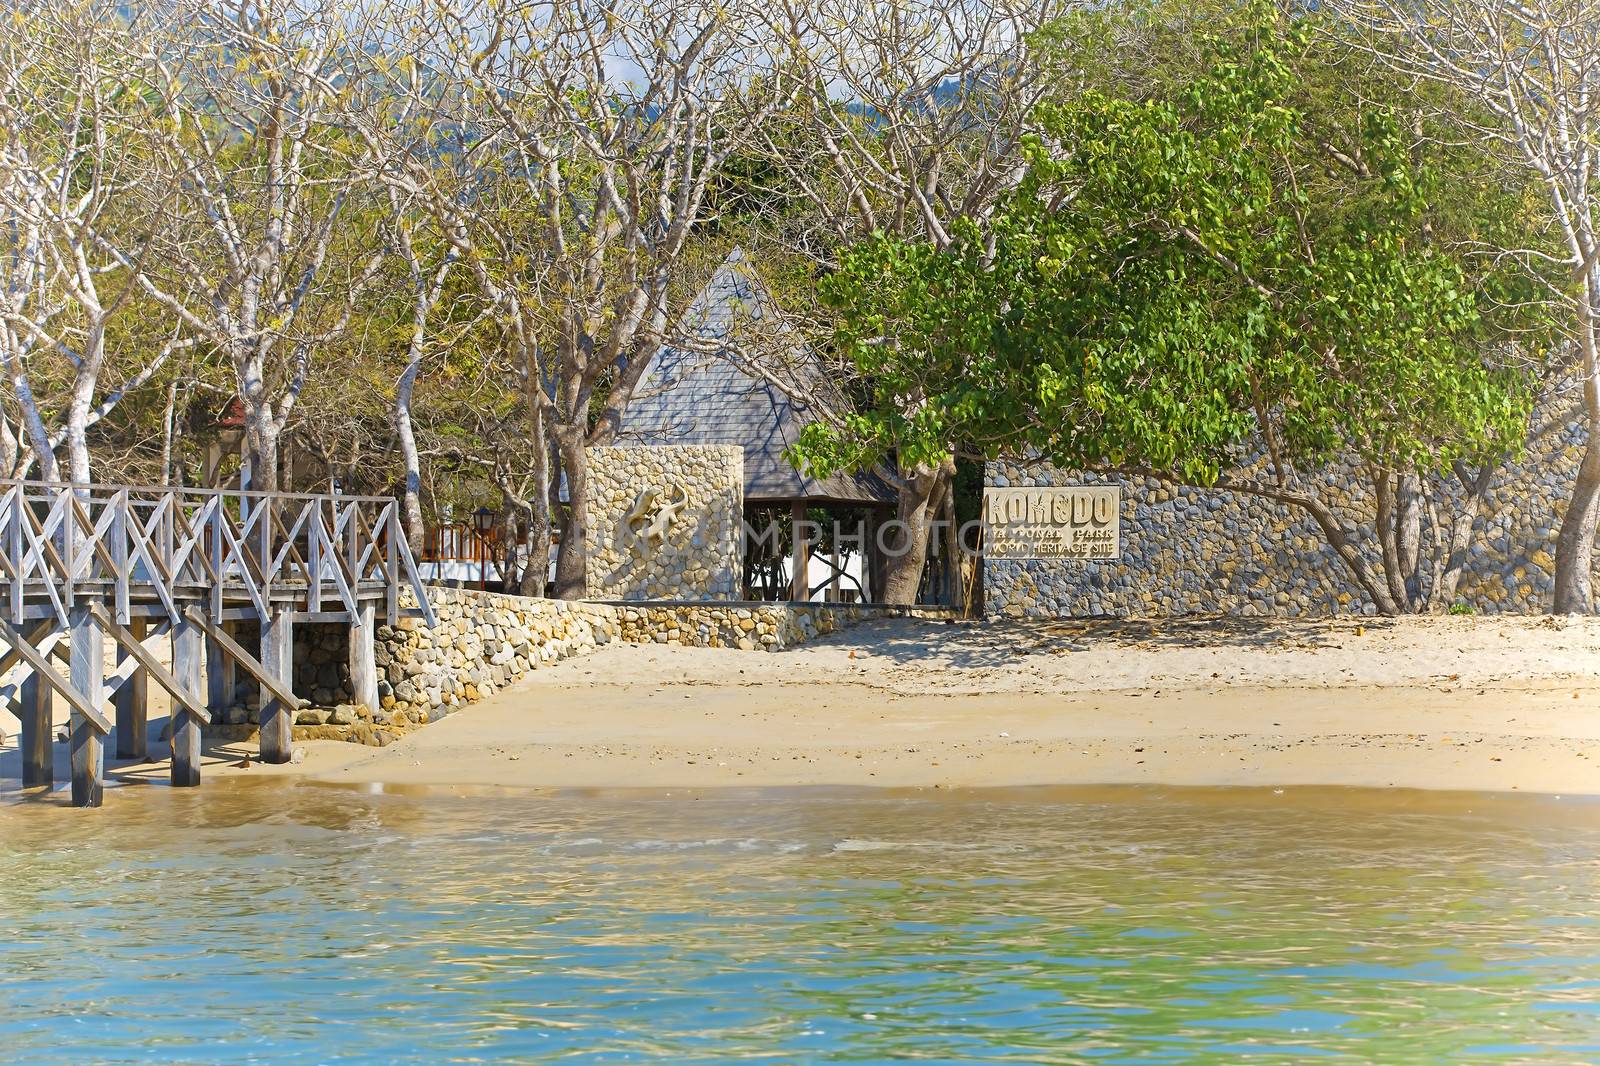 The beautiful beach and pier on Komodo Island entrance